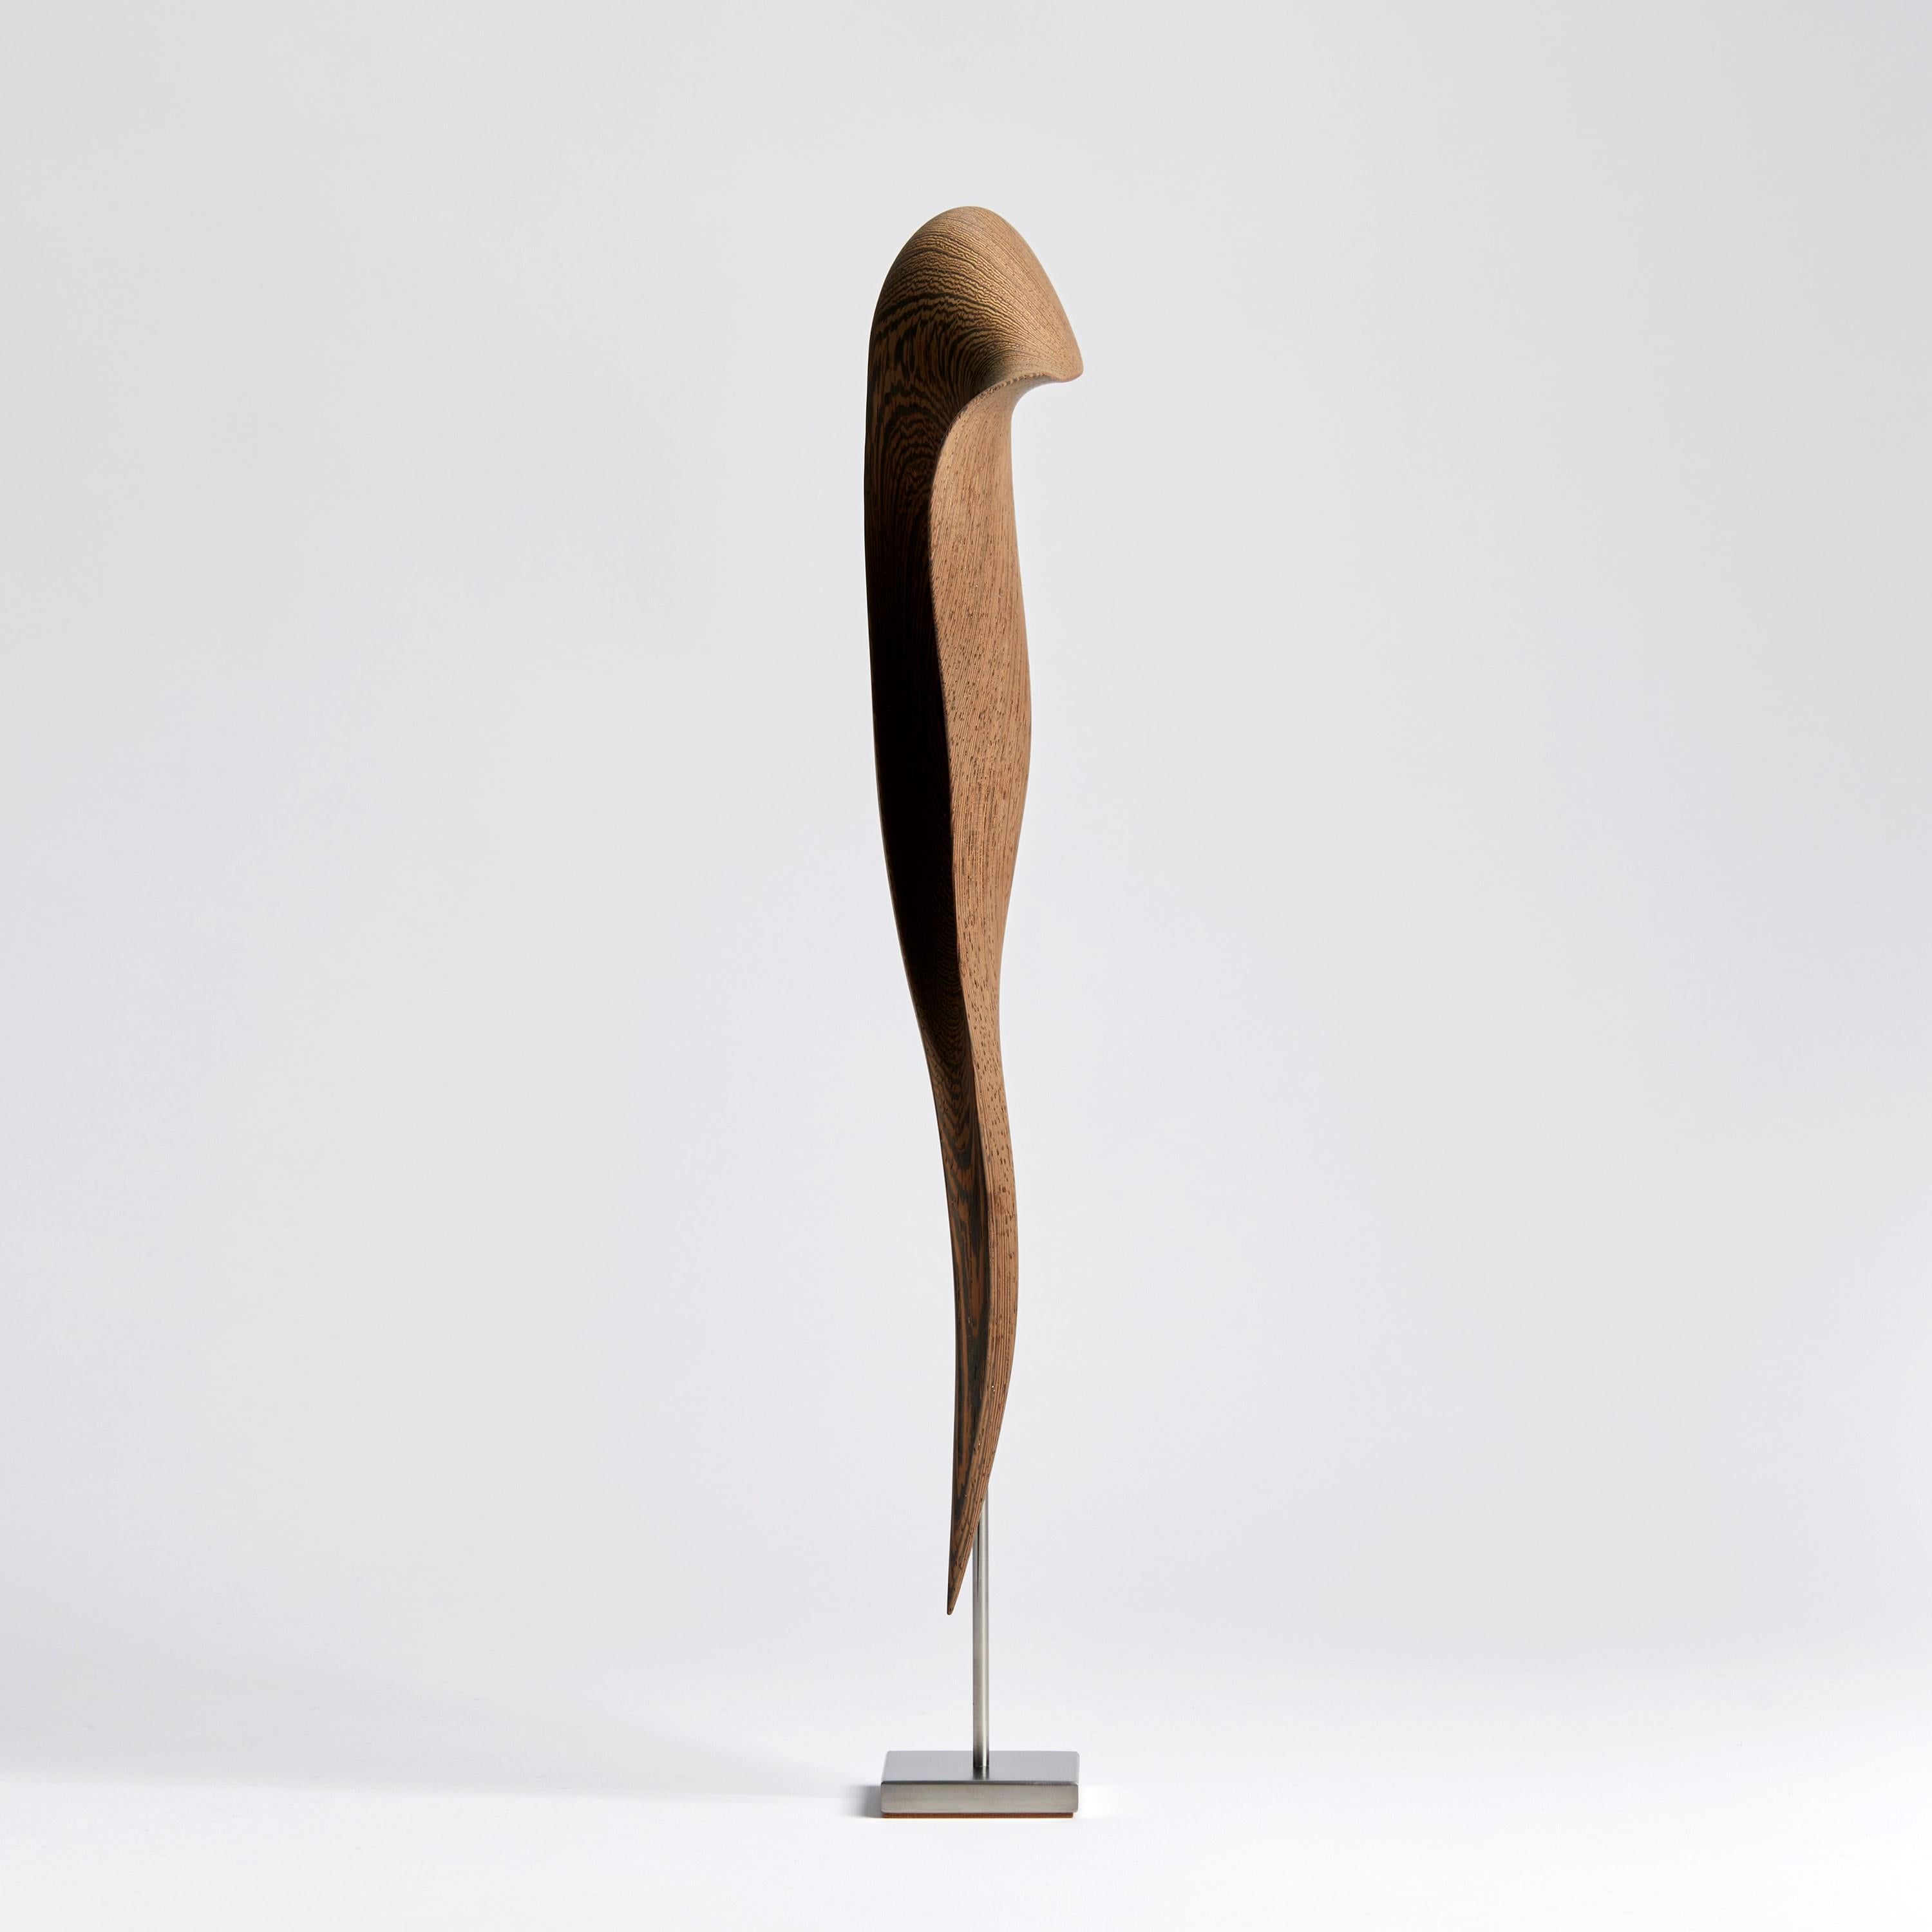 Organic Modern Flow Petit No 3, an Abstract Wooden Sculpture by the Danish Studio Egeværk